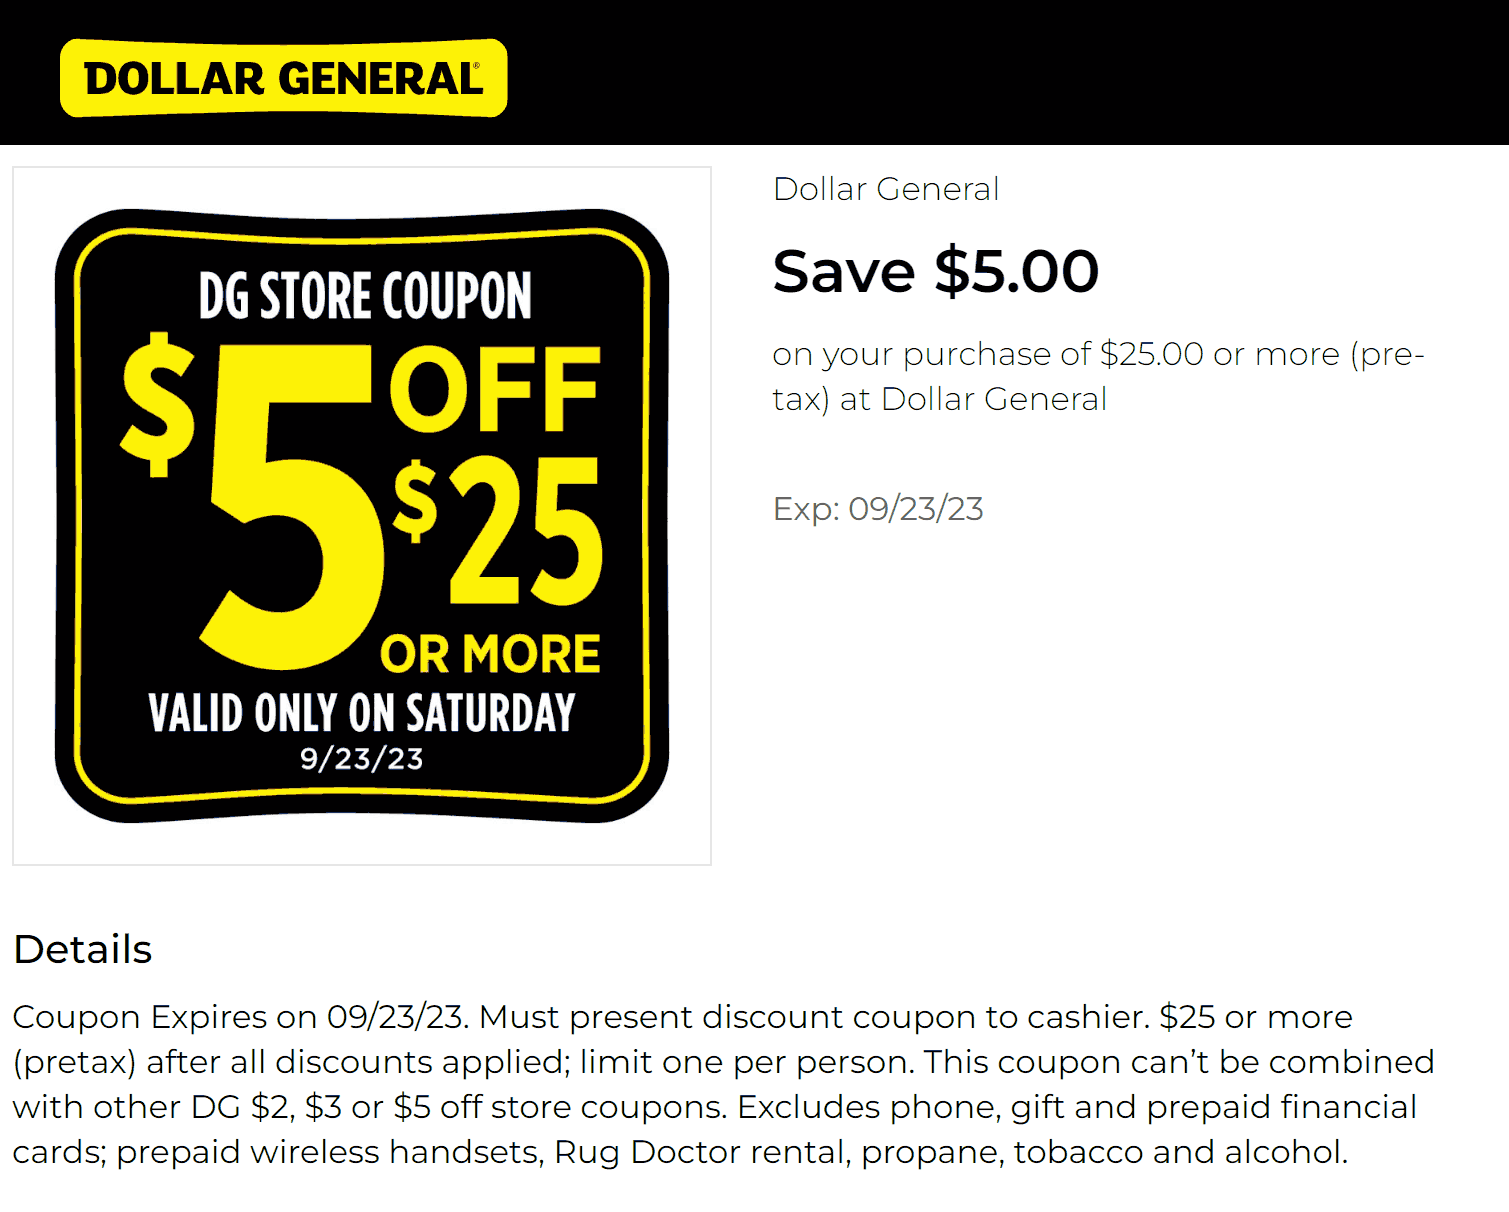 Dollar General stores Coupon  $5 off $25 Saturday at Dollar General #dollargeneral 